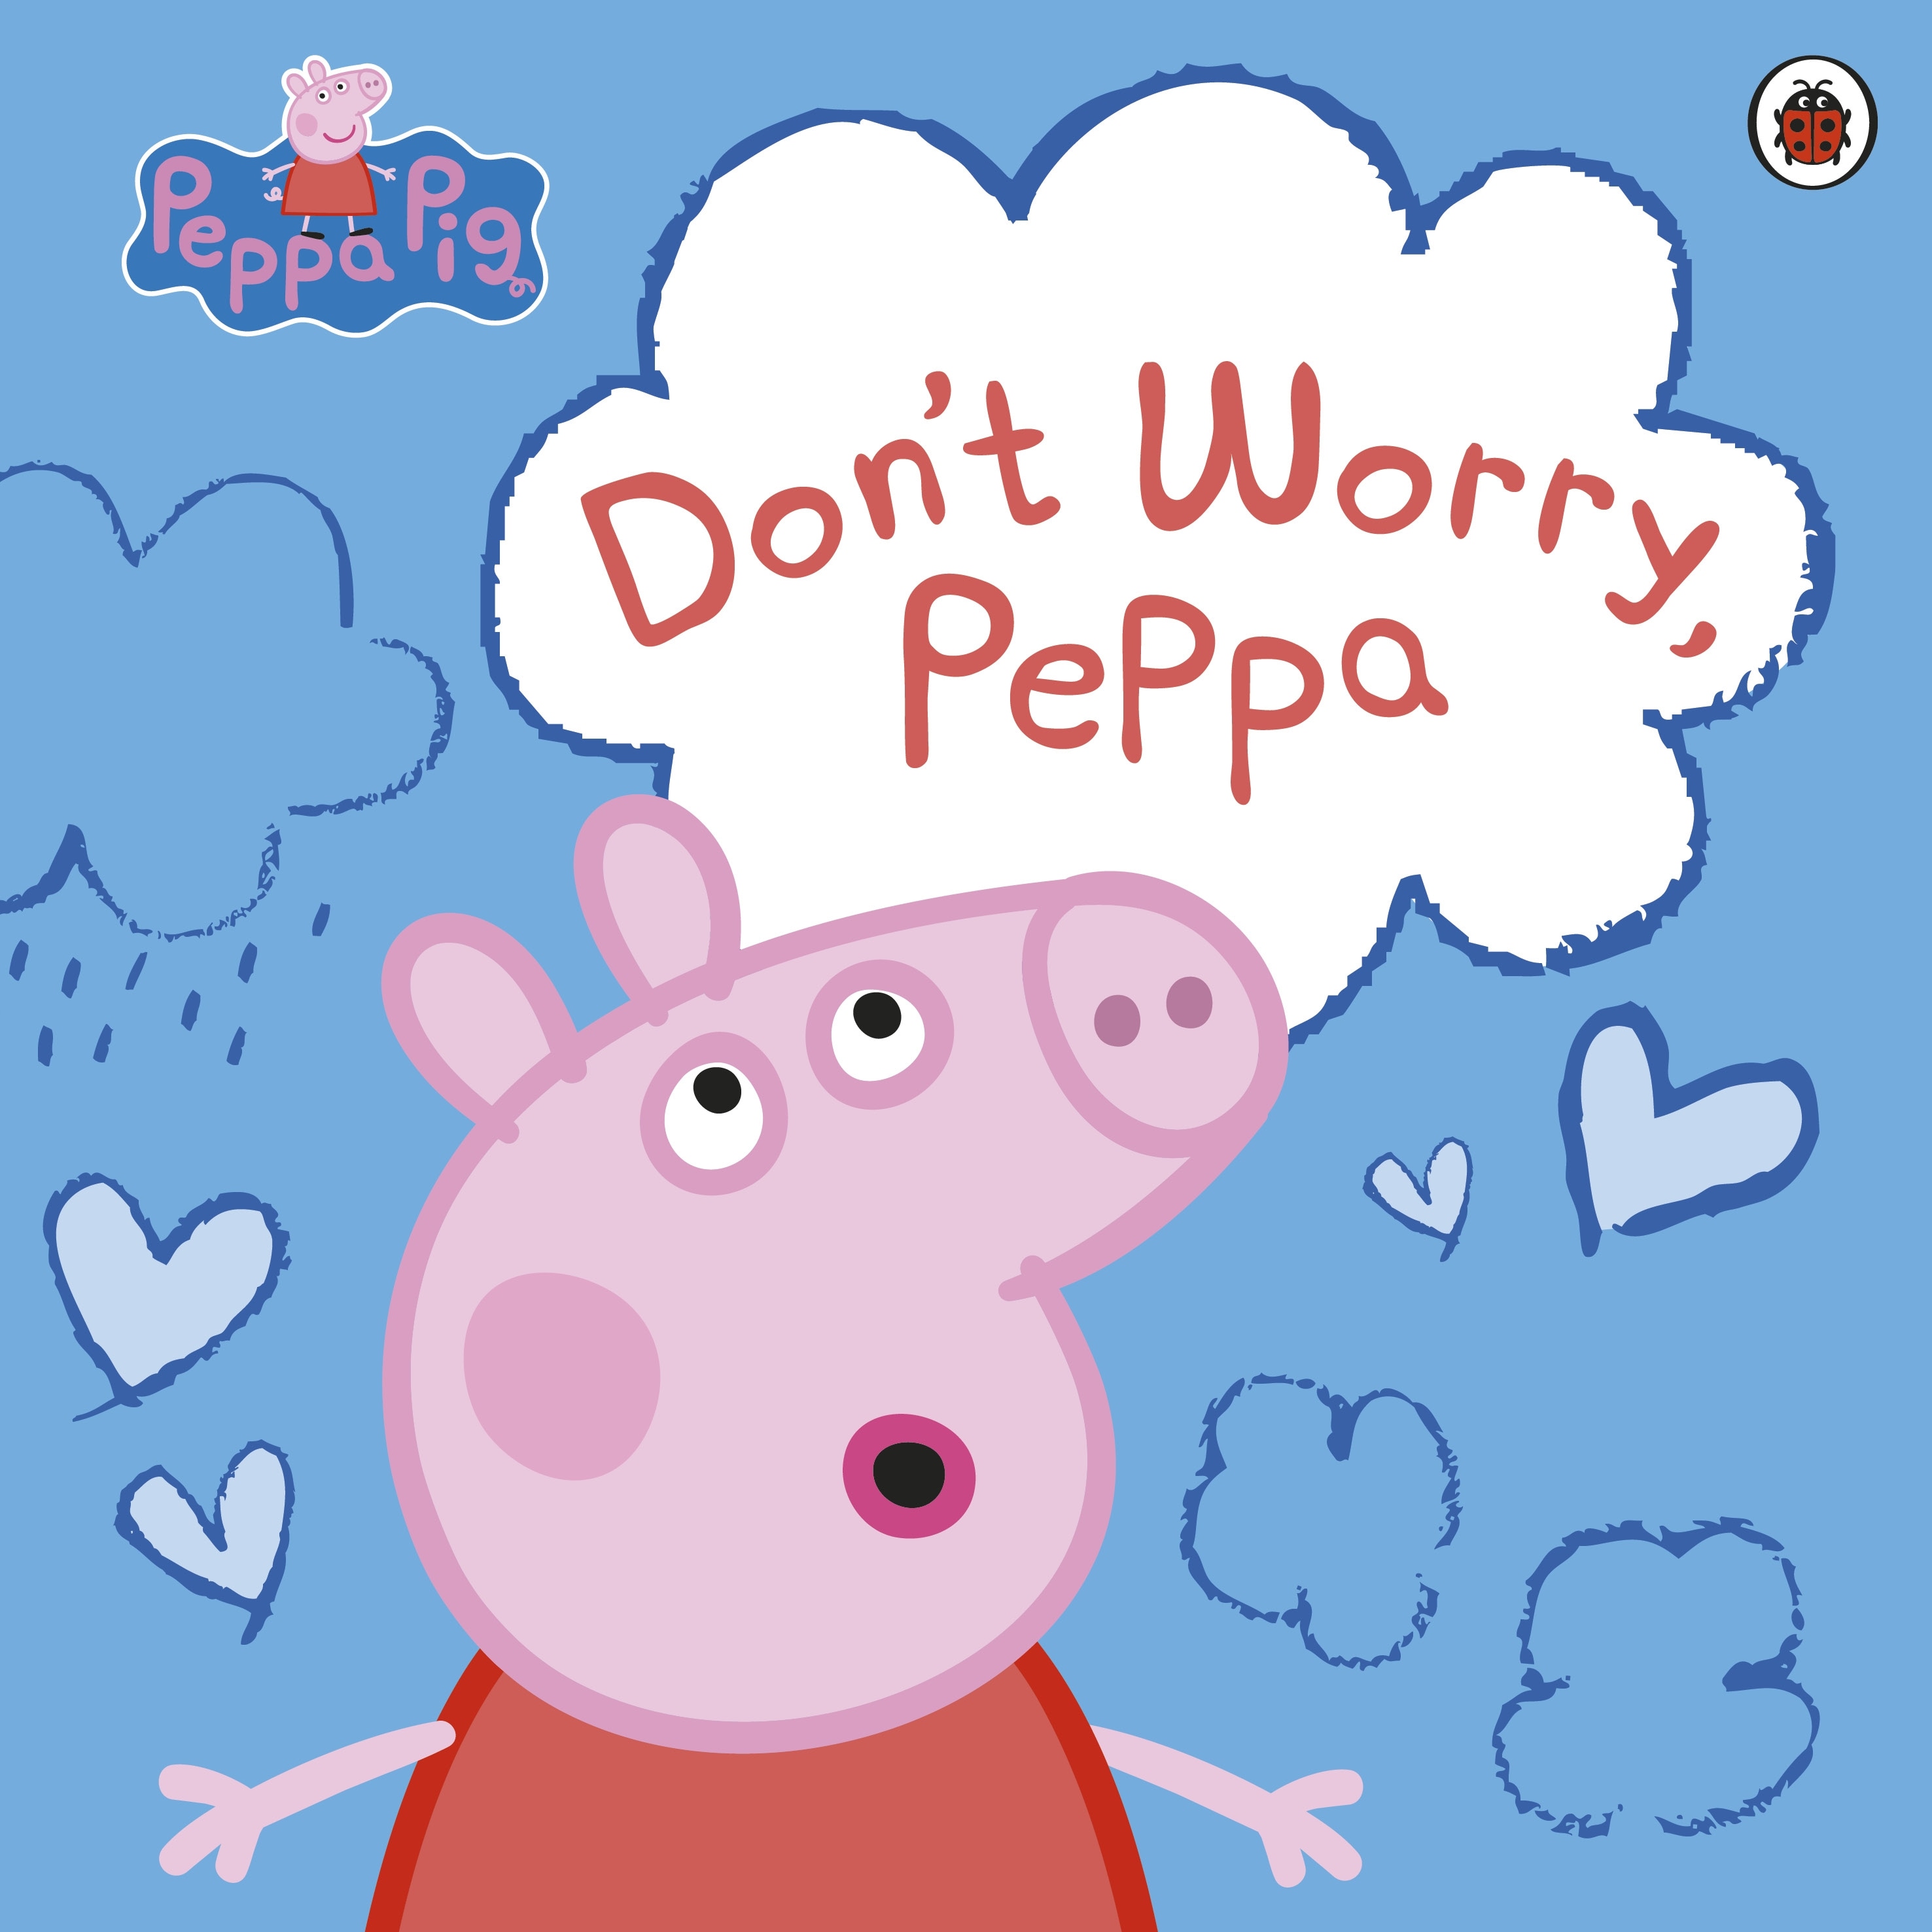 Book “Peppa Pig: Don't Worry, Peppa” by Peppa Pig — December 29, 2022